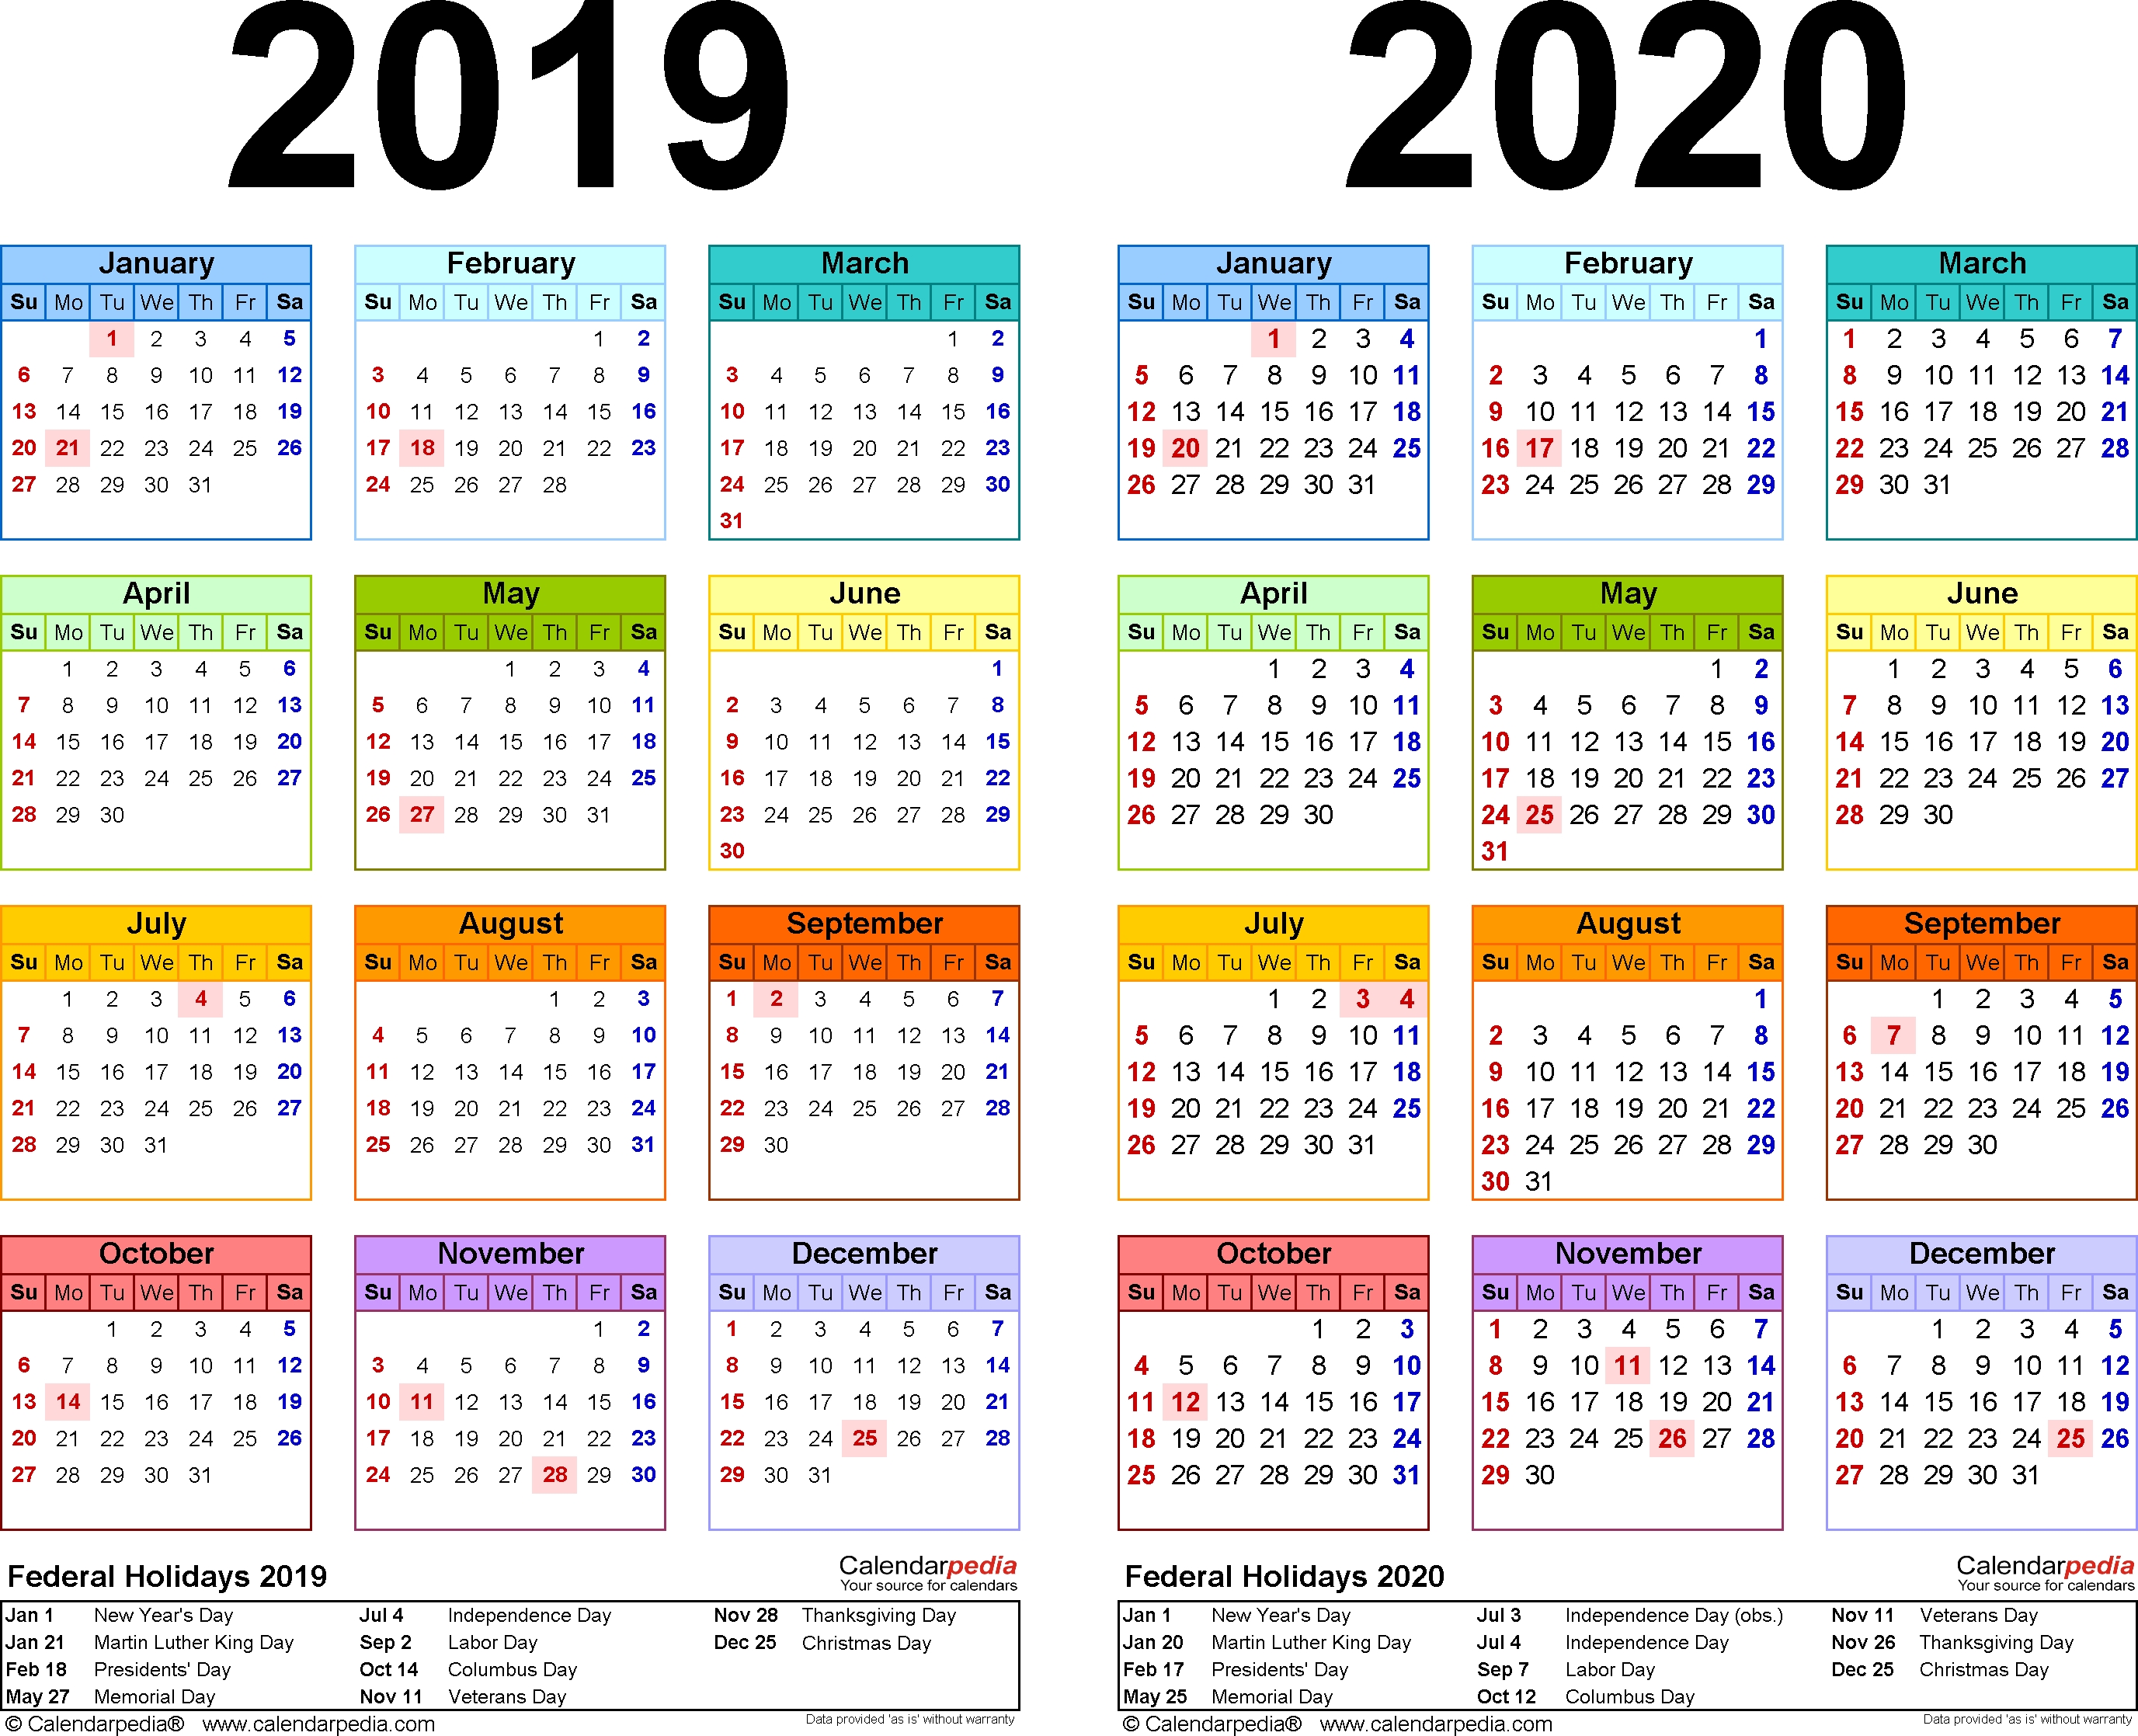 2019-2020 Calendar - Free Printable Two-Year Pdf Calendars intended for Free Printable Calendars 2019-2020 To Edit